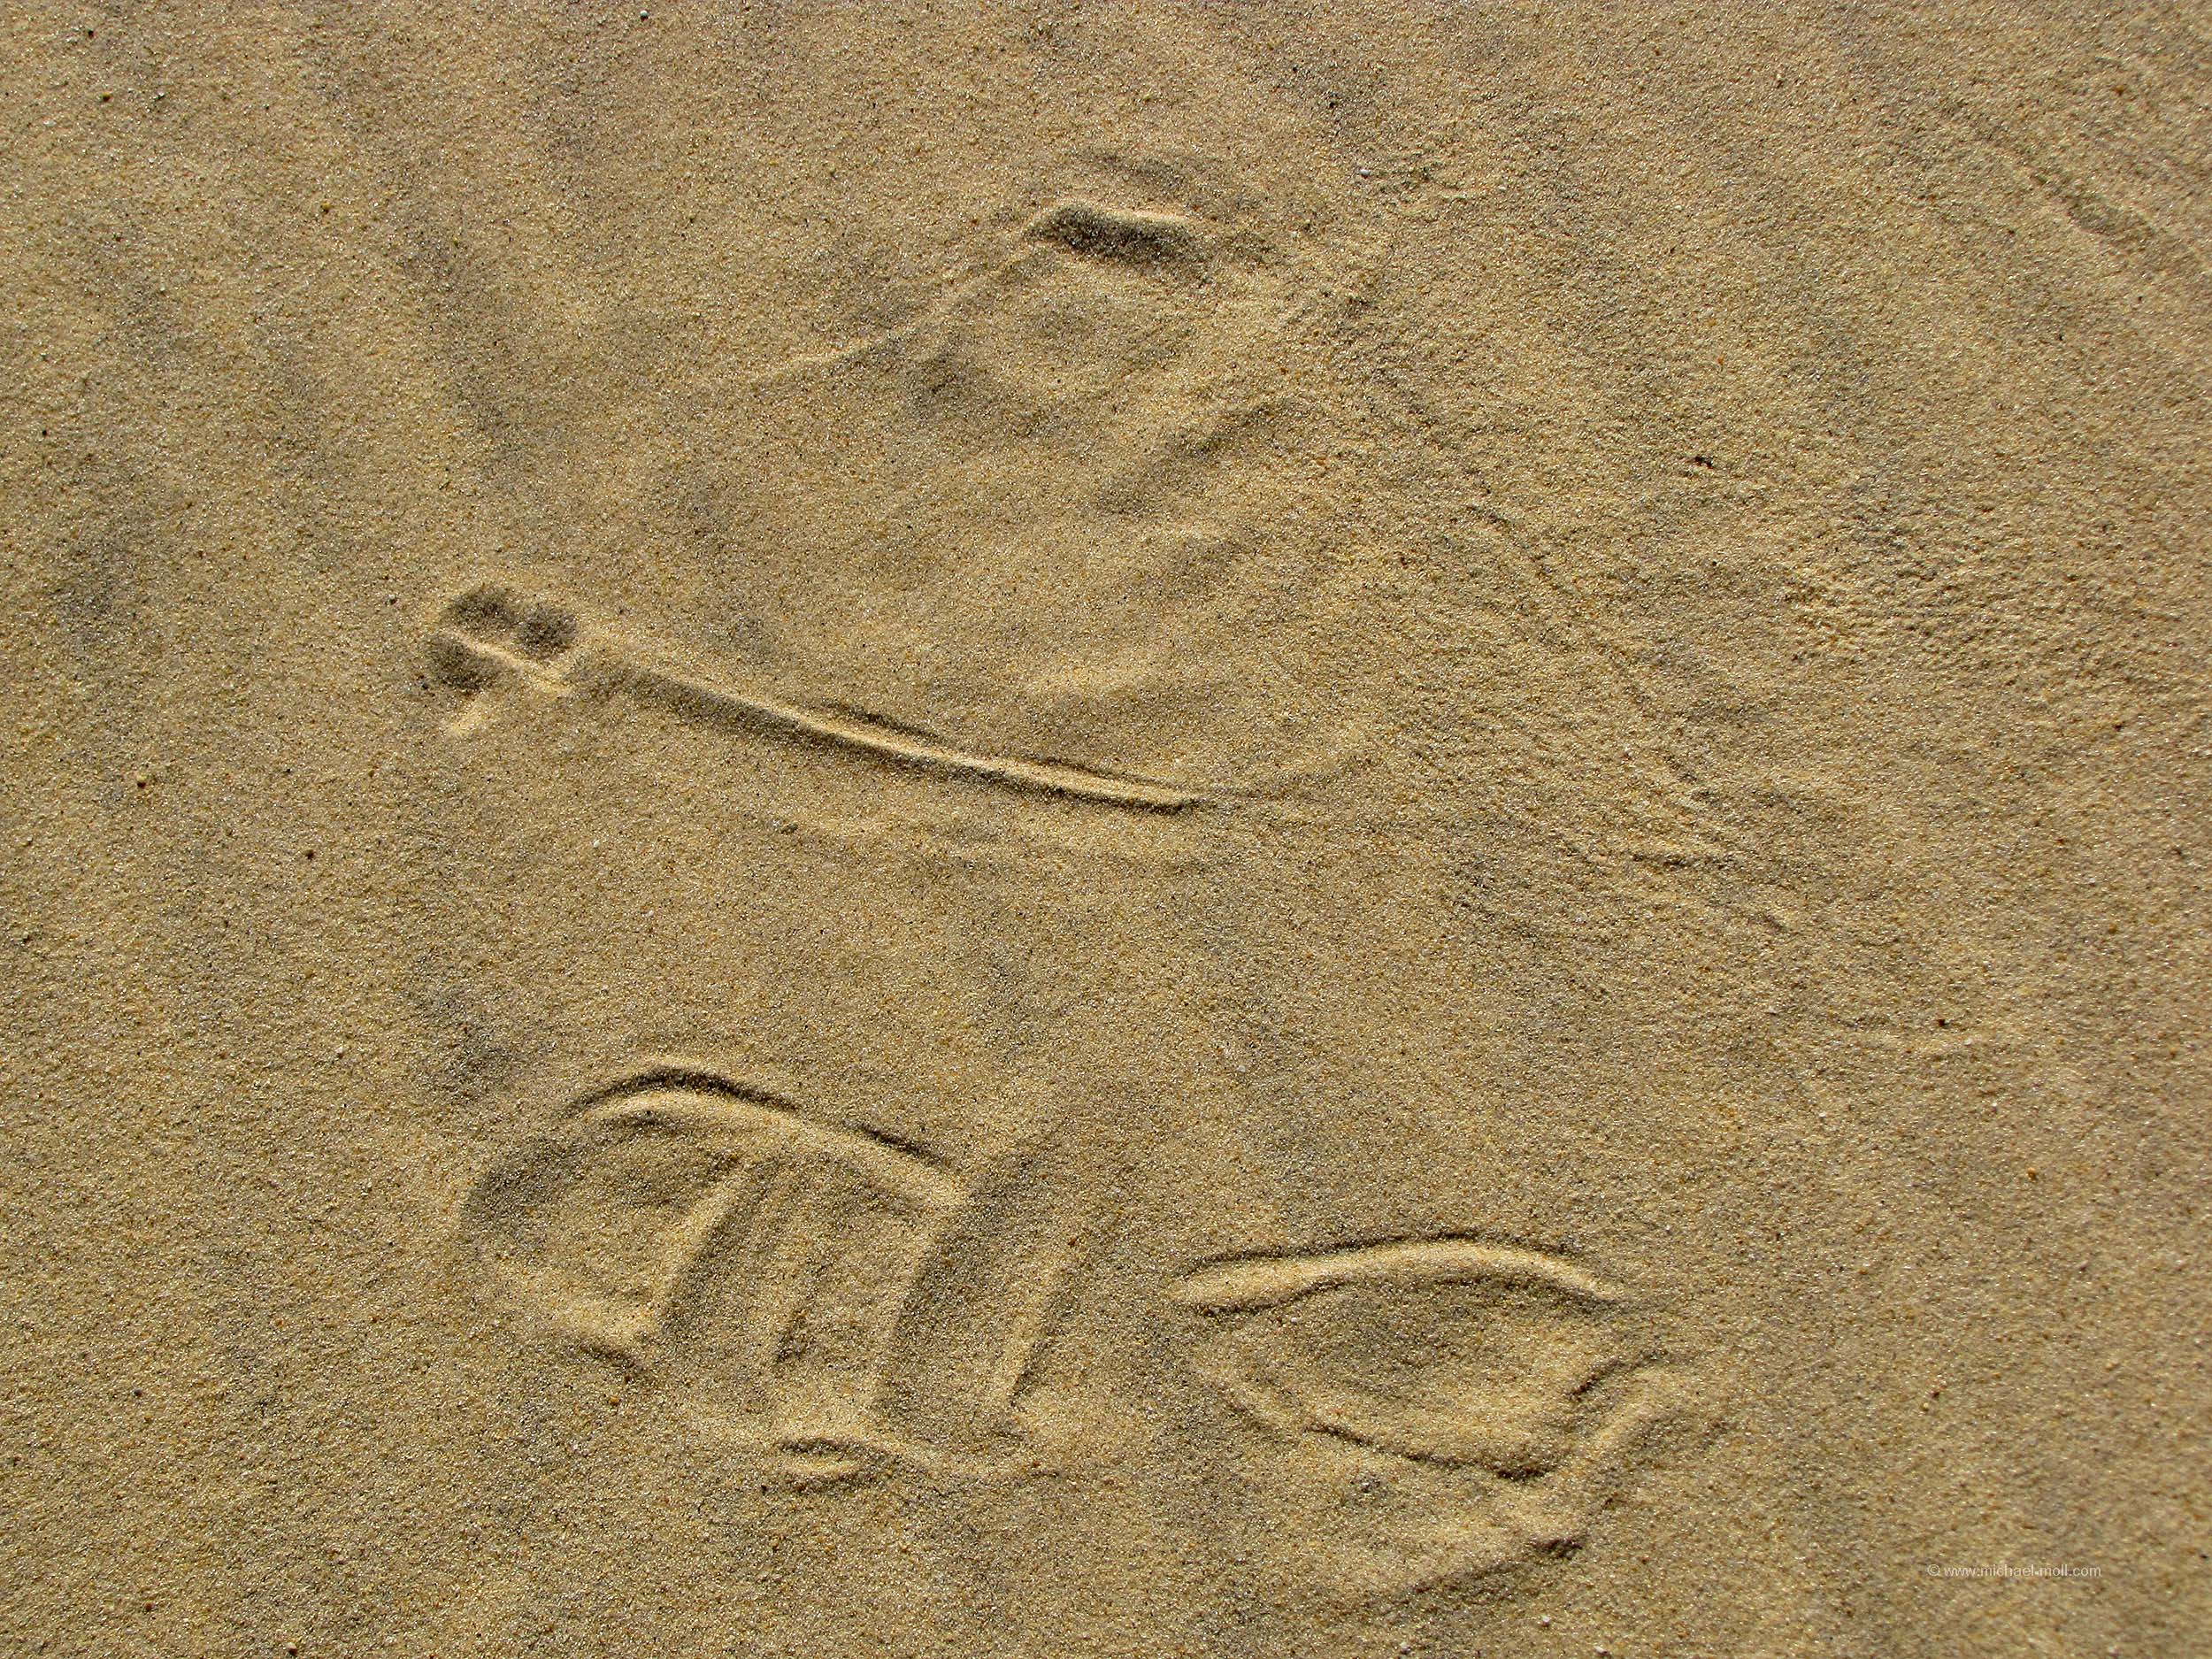 Hier saß Pingu im Sand